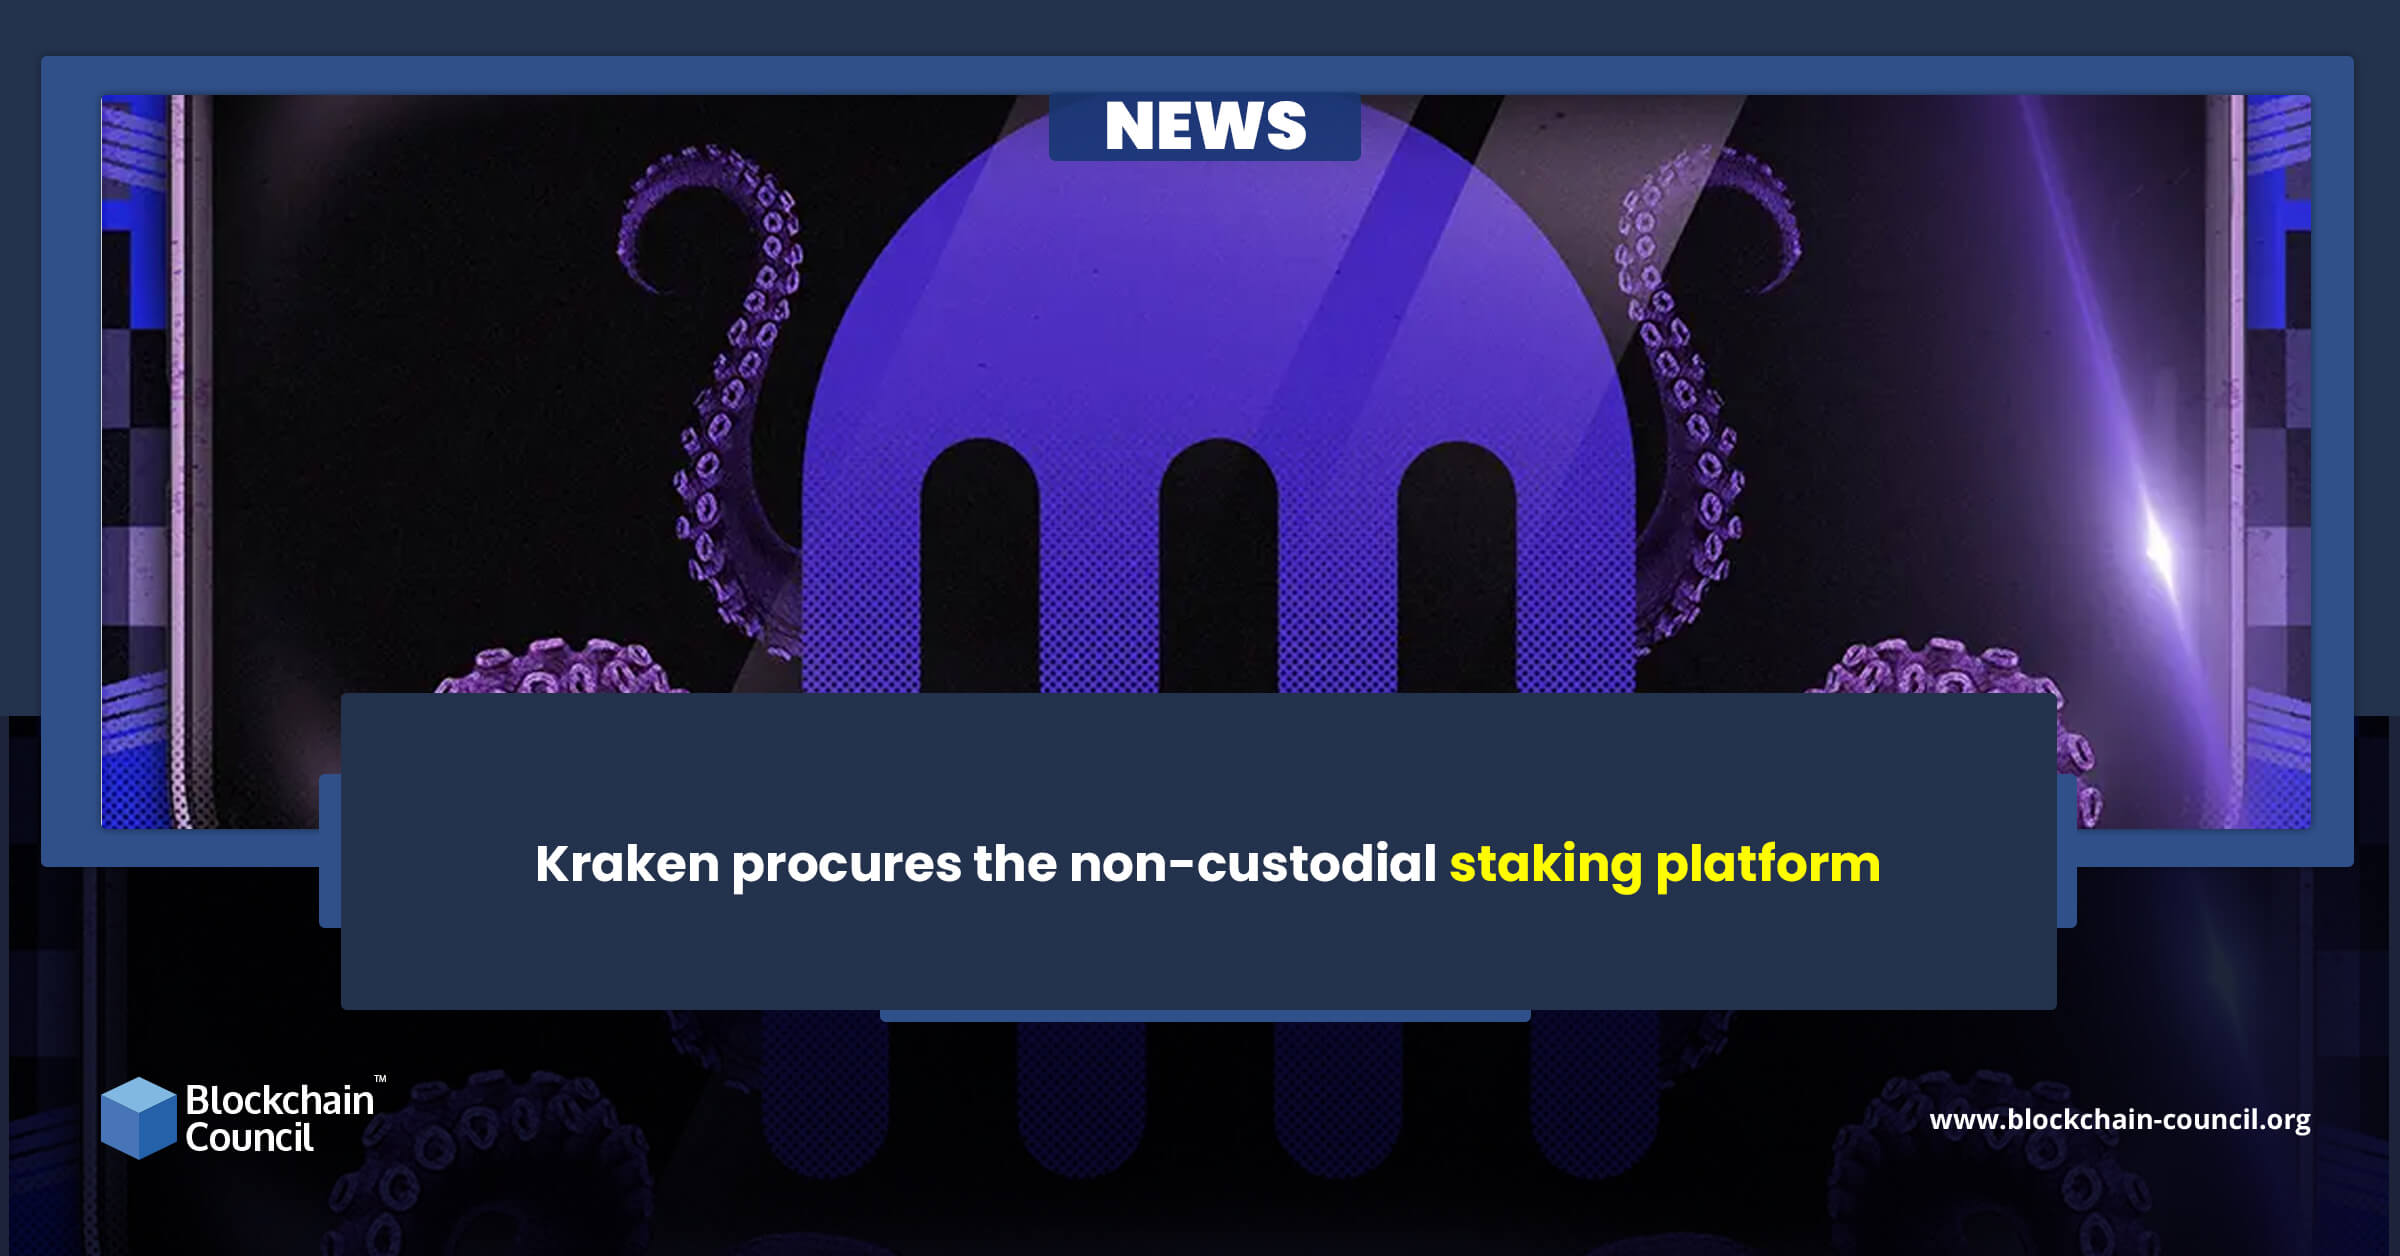 Kraken procures the non-custodial staking platform